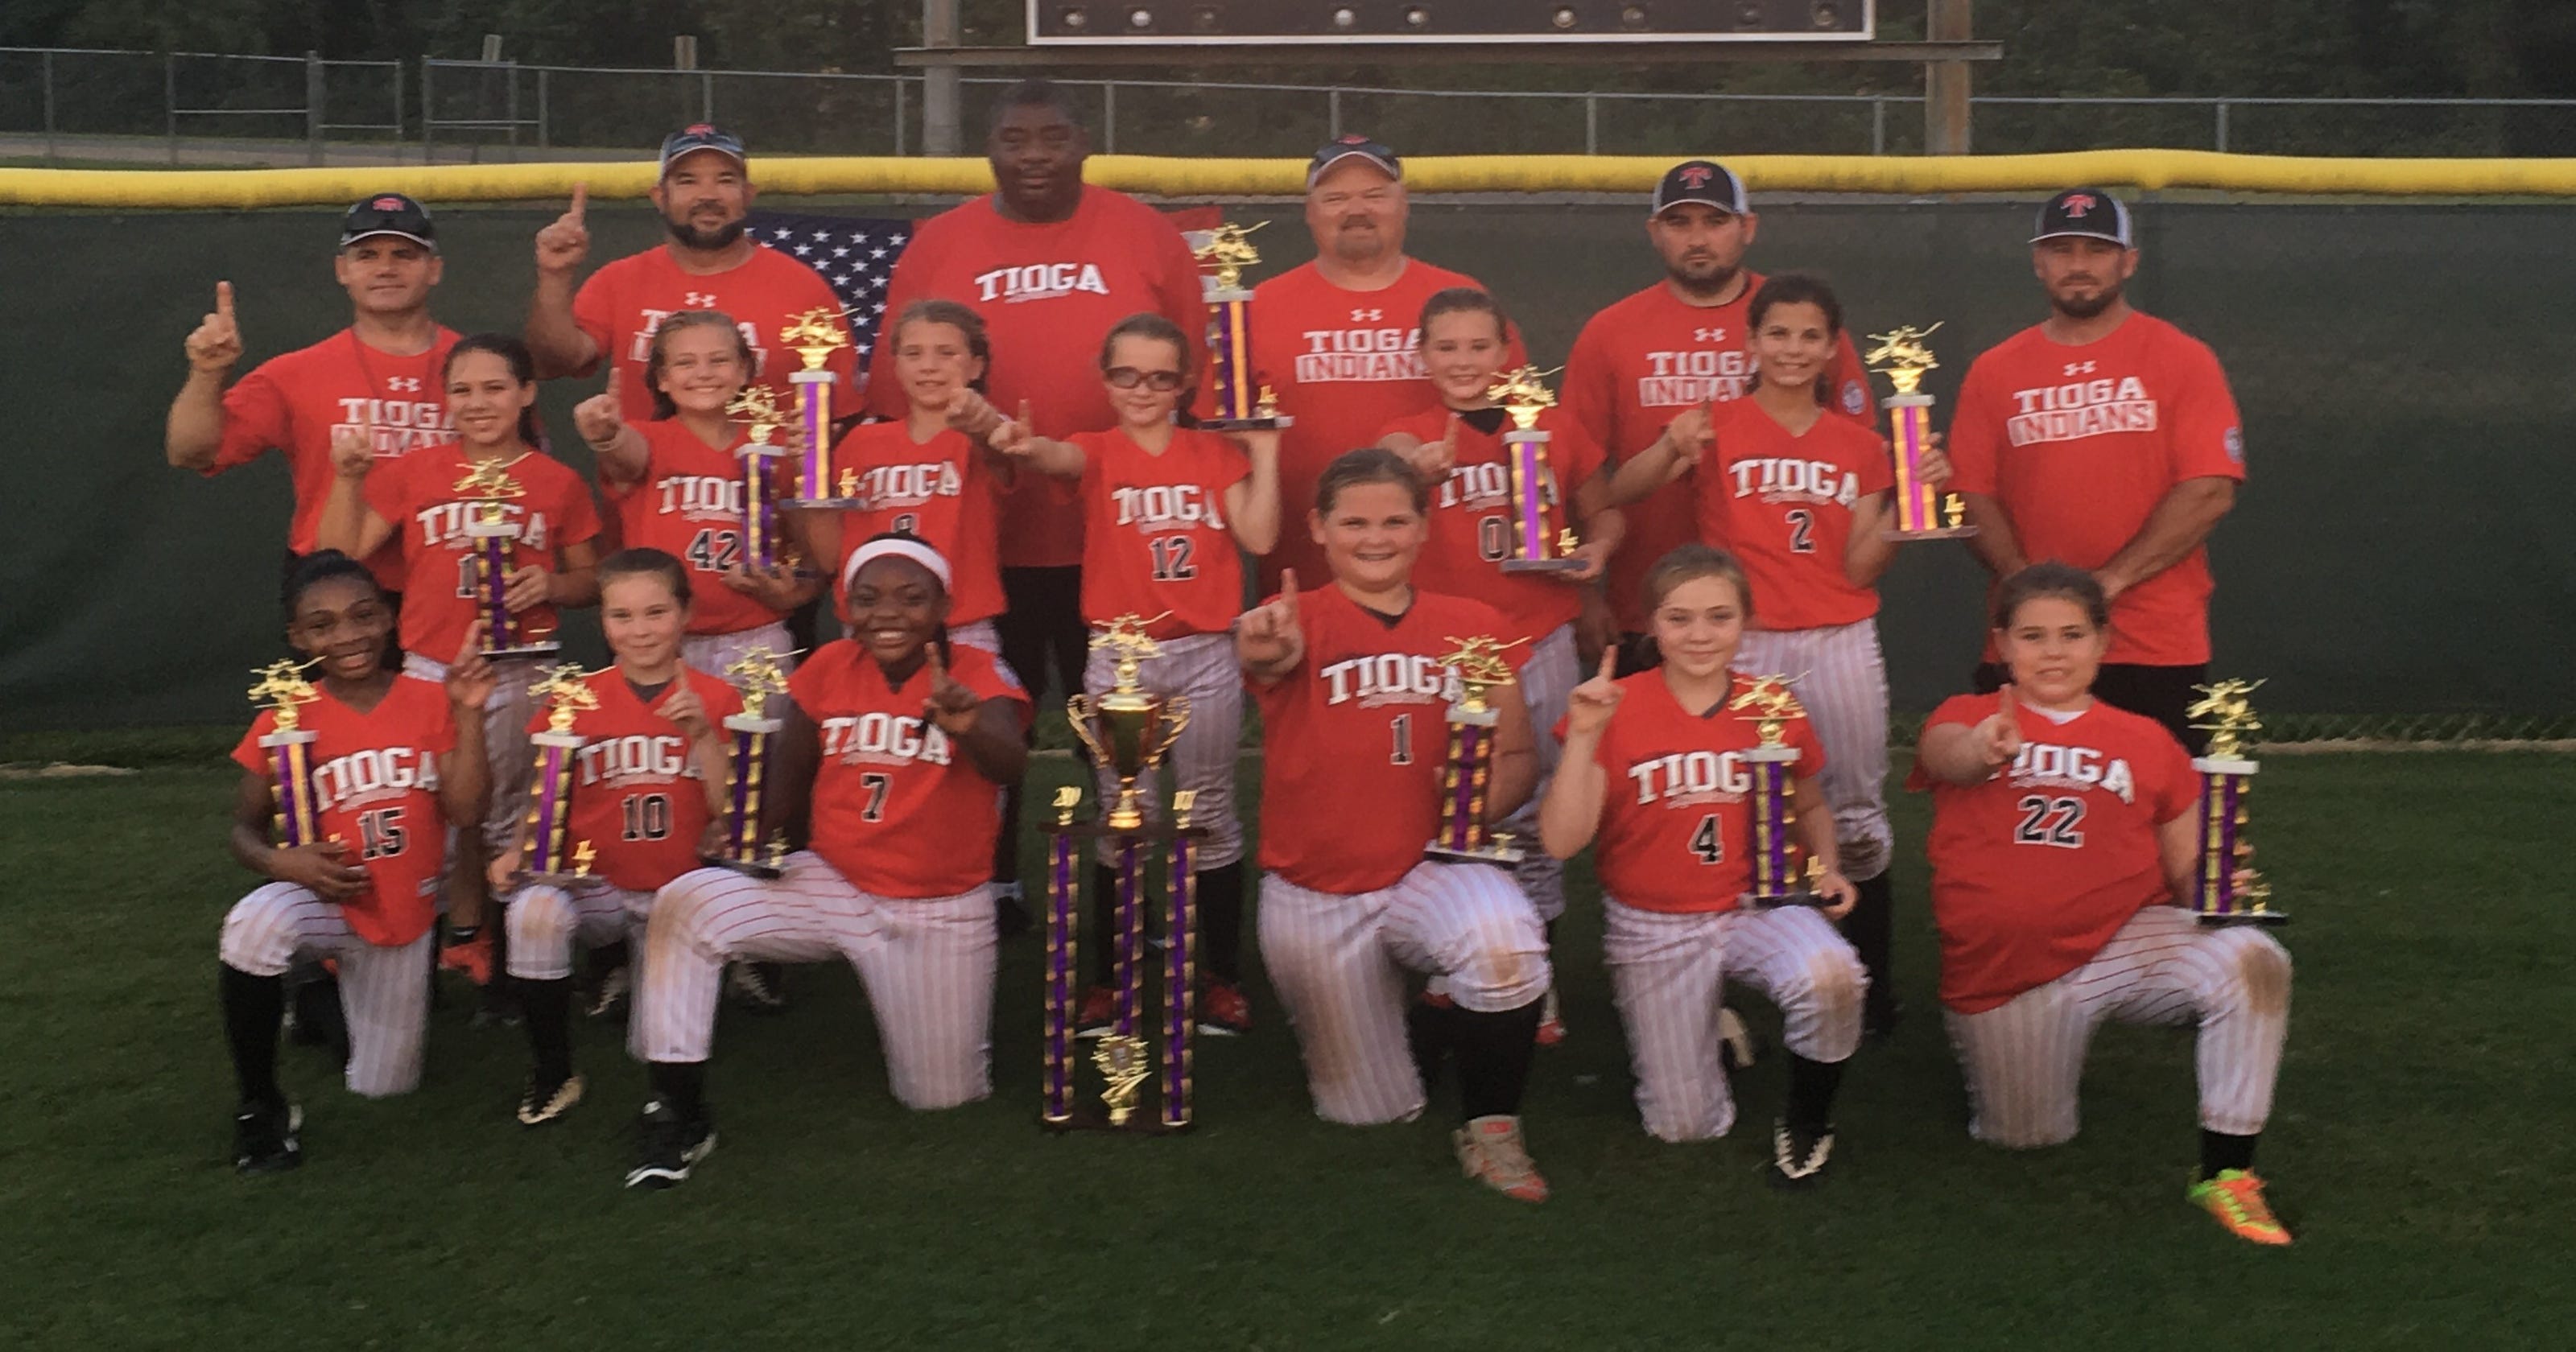 Ward 10 girls advance to Dixie Softball World Series